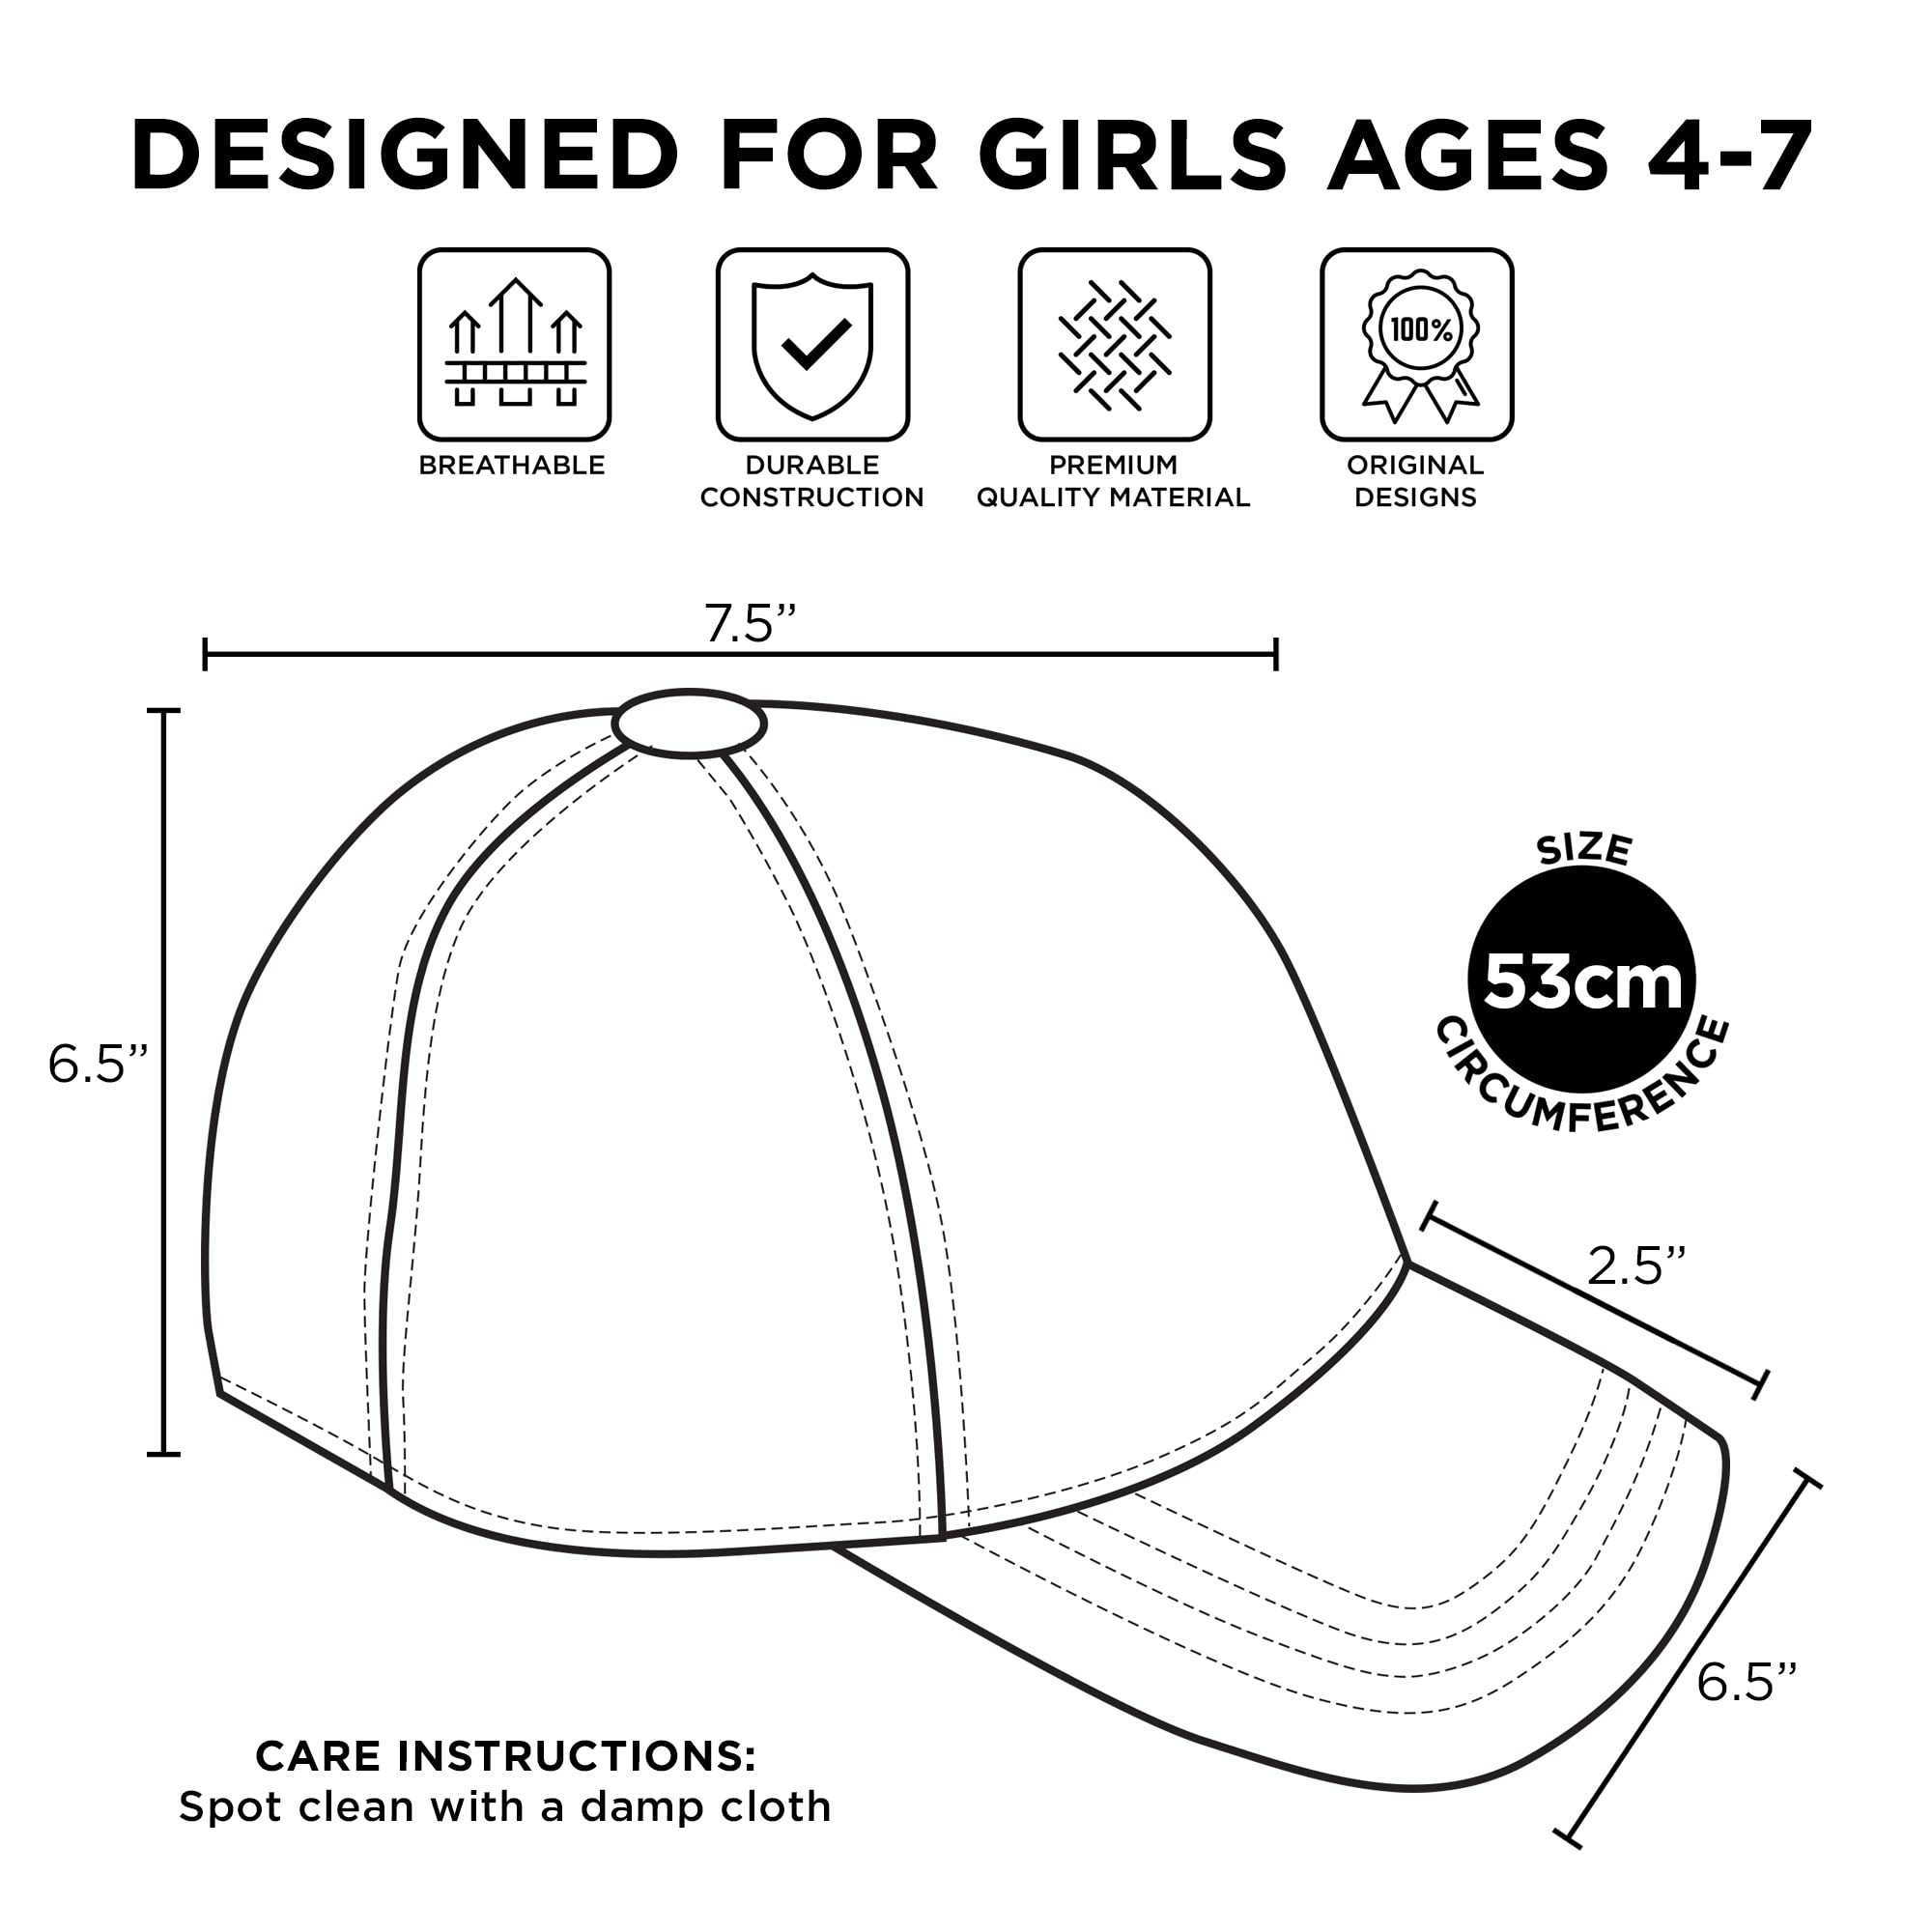 DreamWorks Girls' Little Baseball Cap, Trolls Adjustable Kids Hat for Ages 4-7